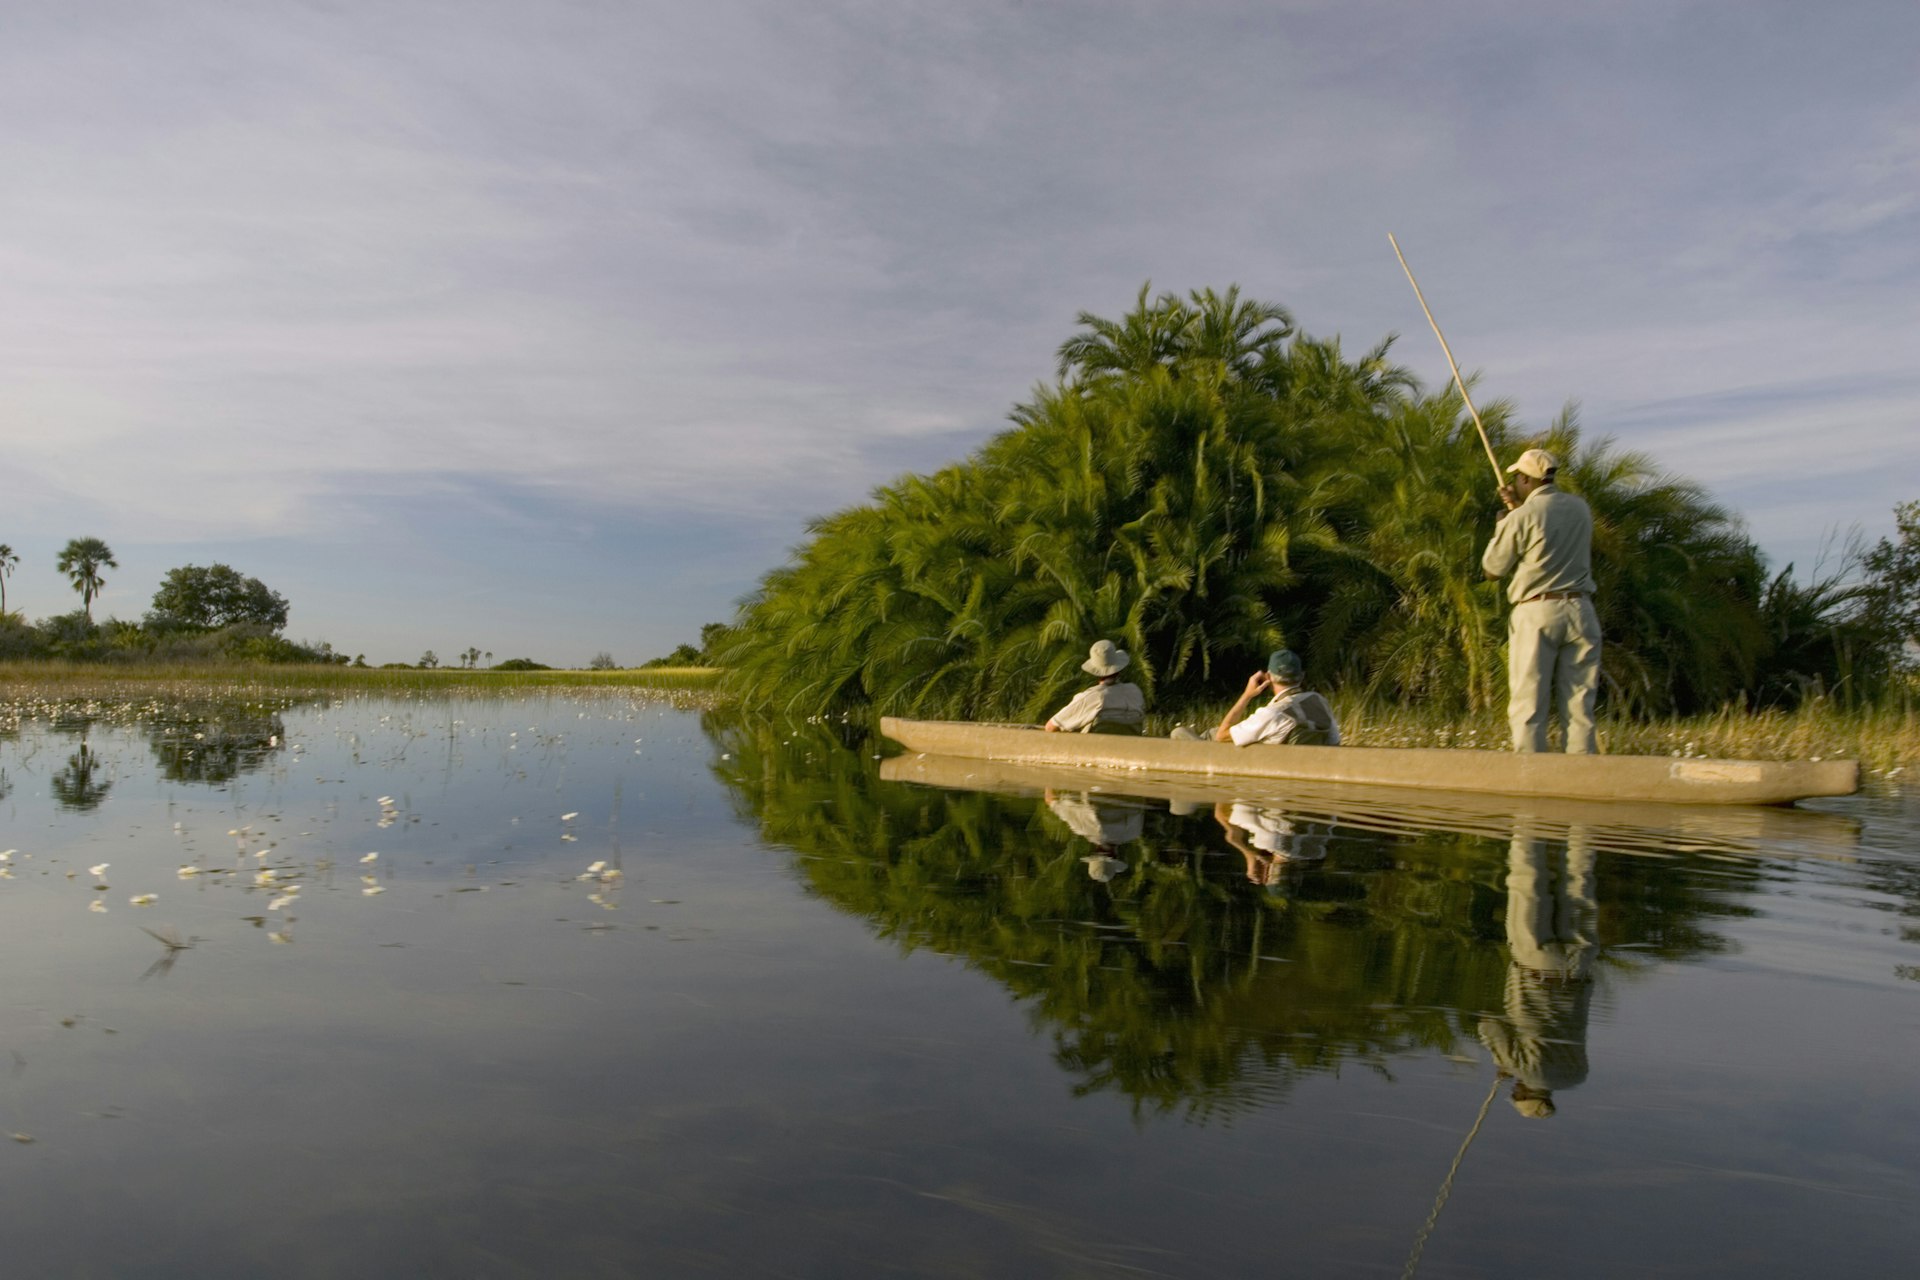 A mokoro (traditional canoe) tour through the waters of the Okavango Delta in Botswana